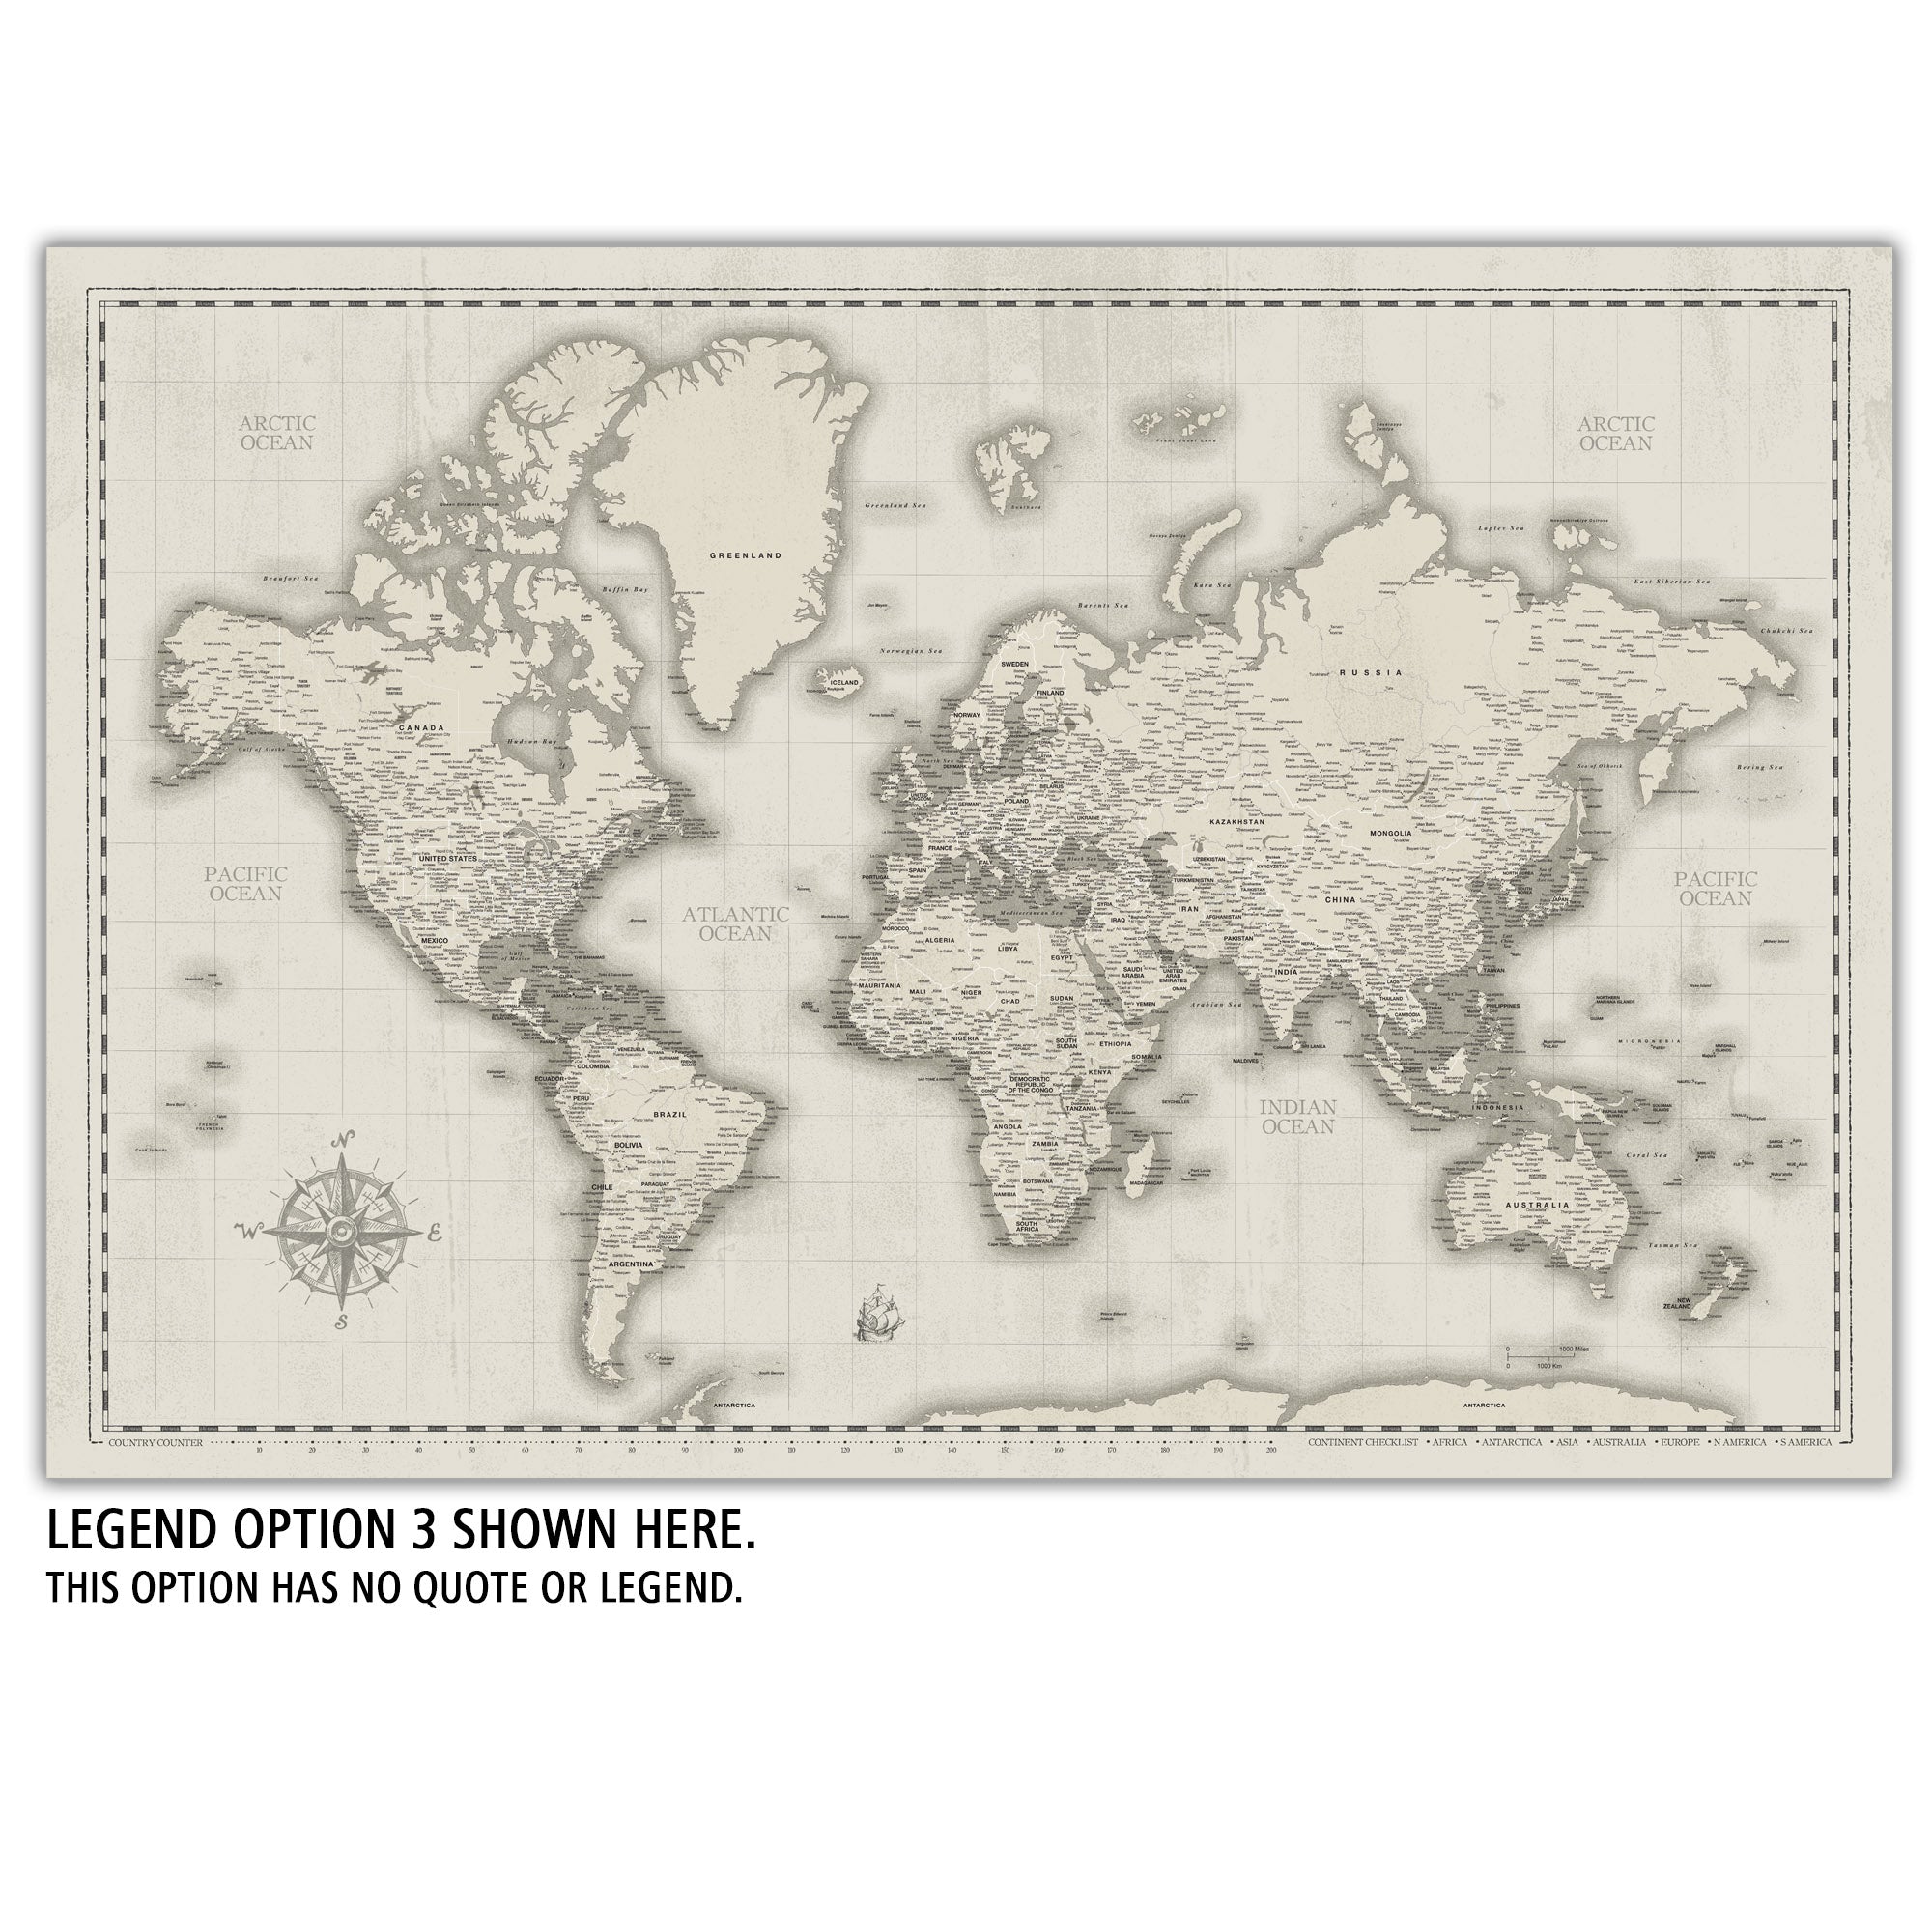 legend on a world map